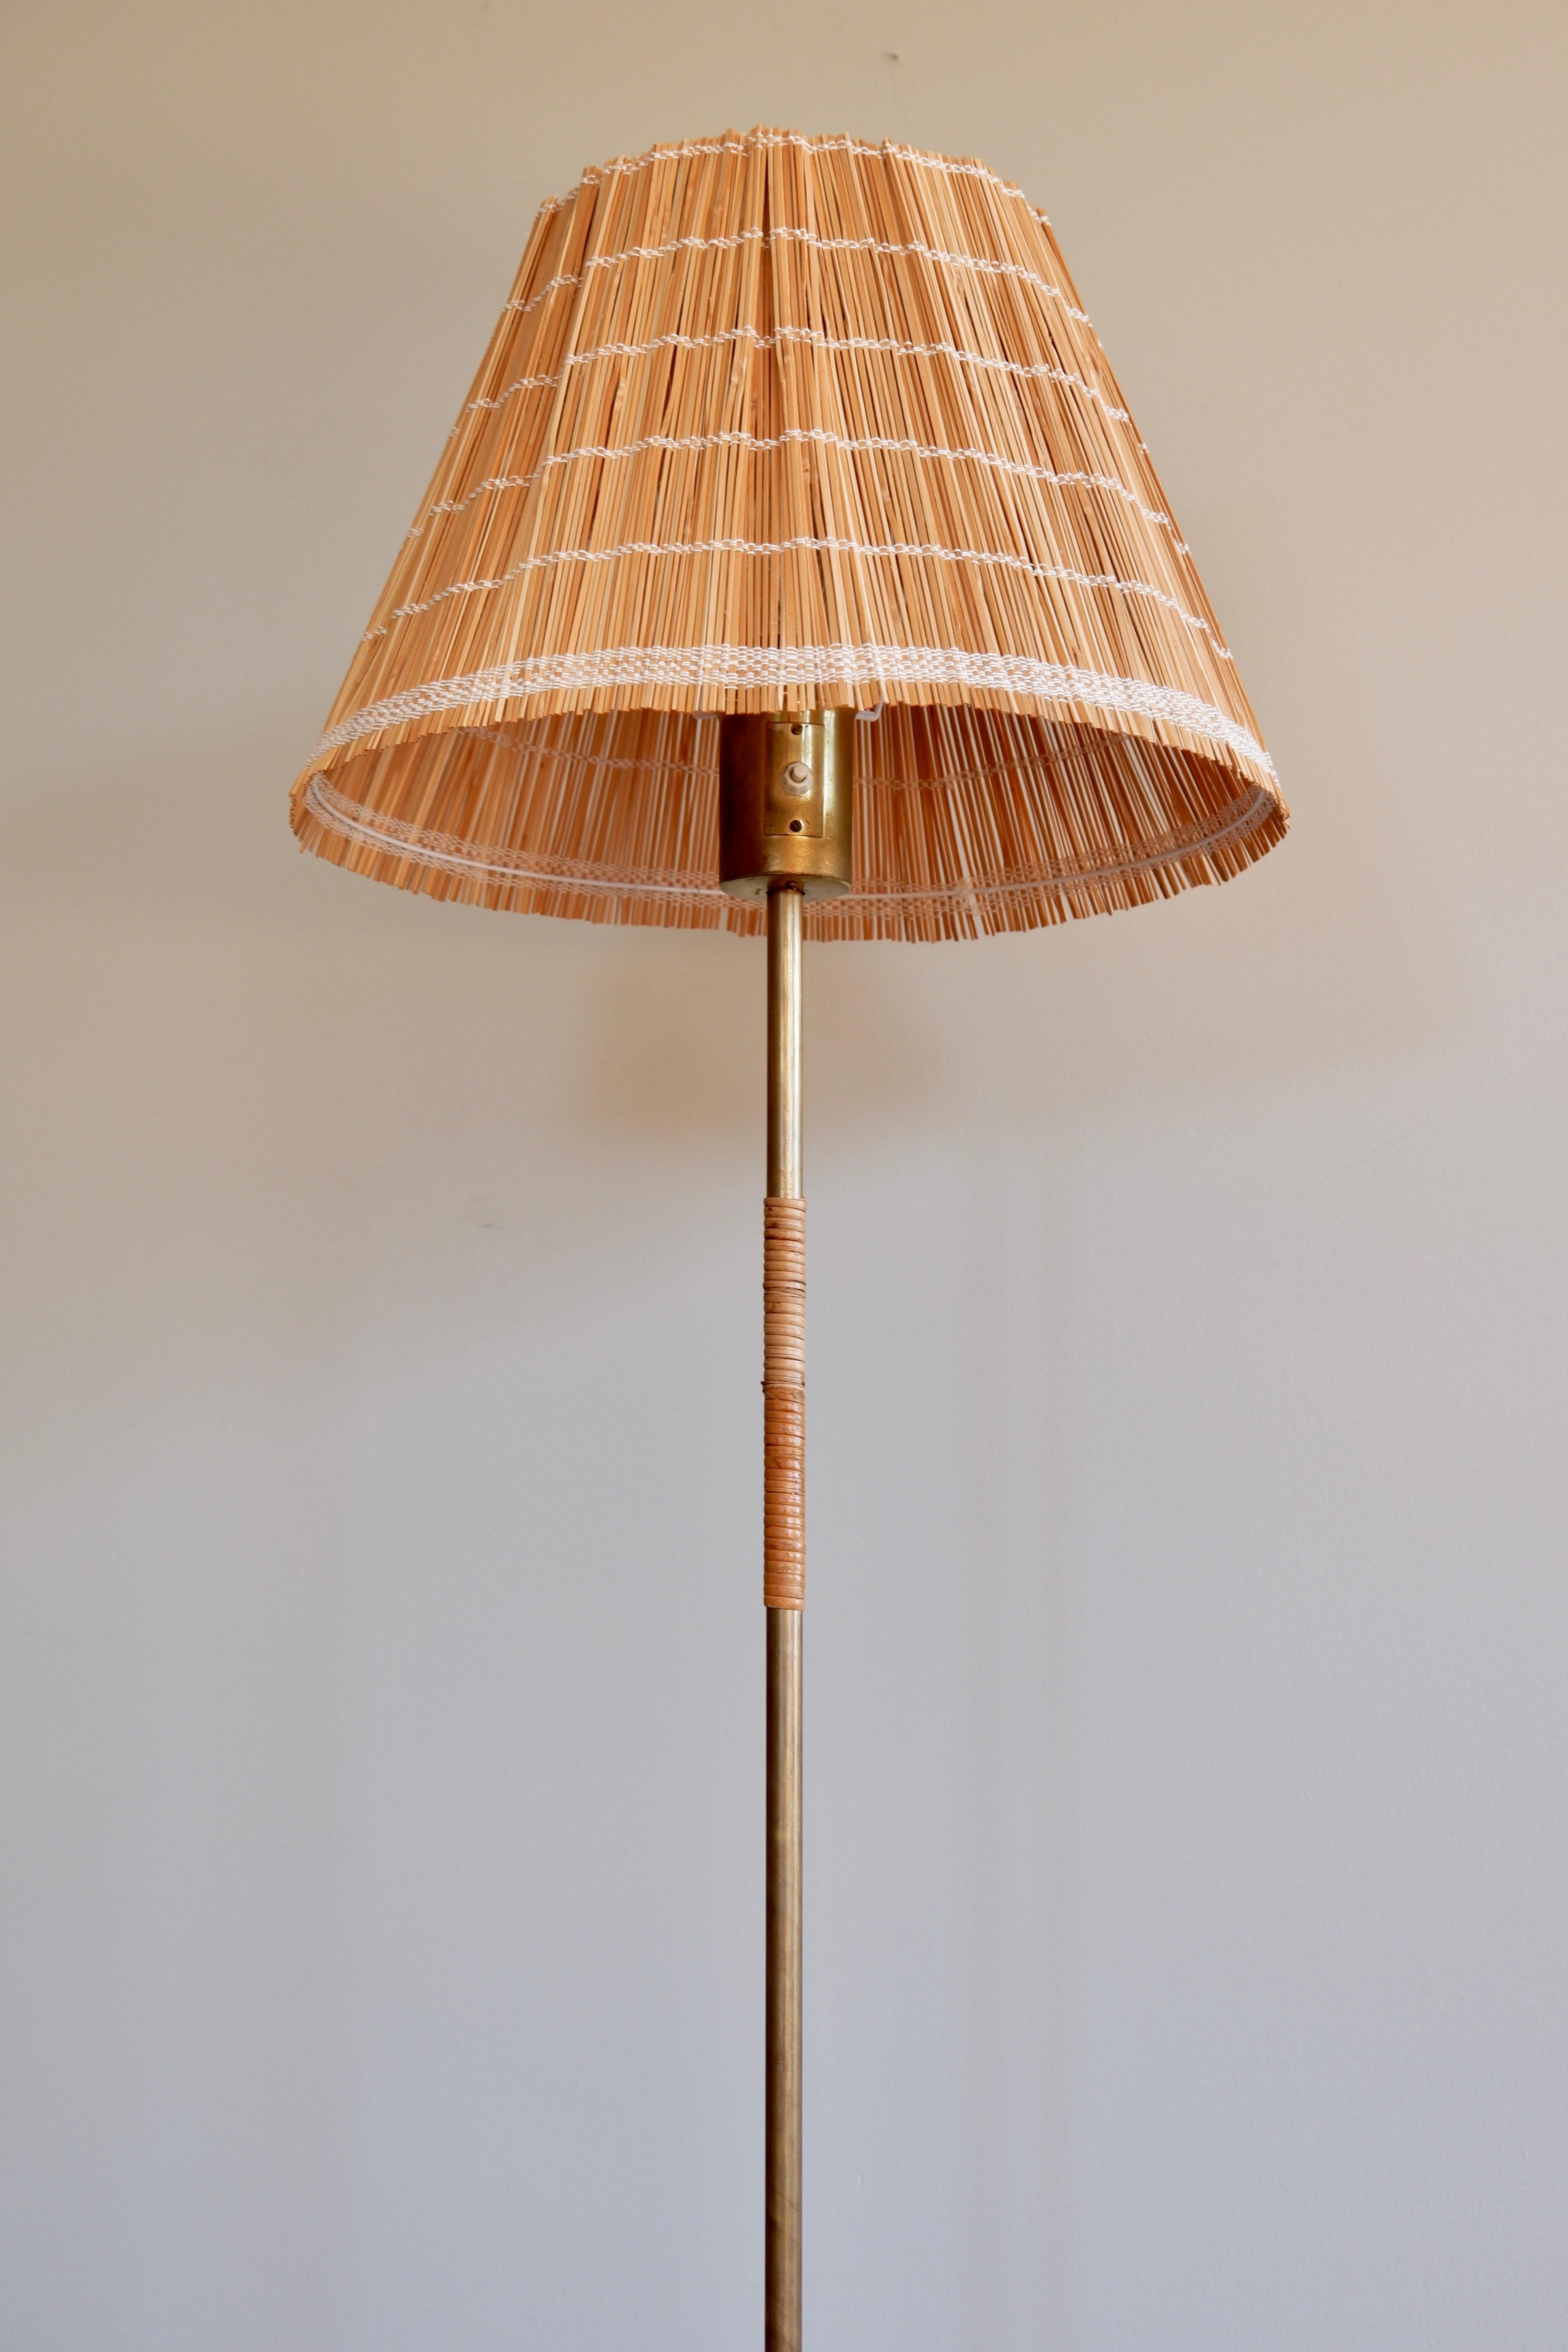 Finnish Paavo Tynell Floor Lamp Model K10-13 for Idman circa 1950, Brass & Rattan For Sale